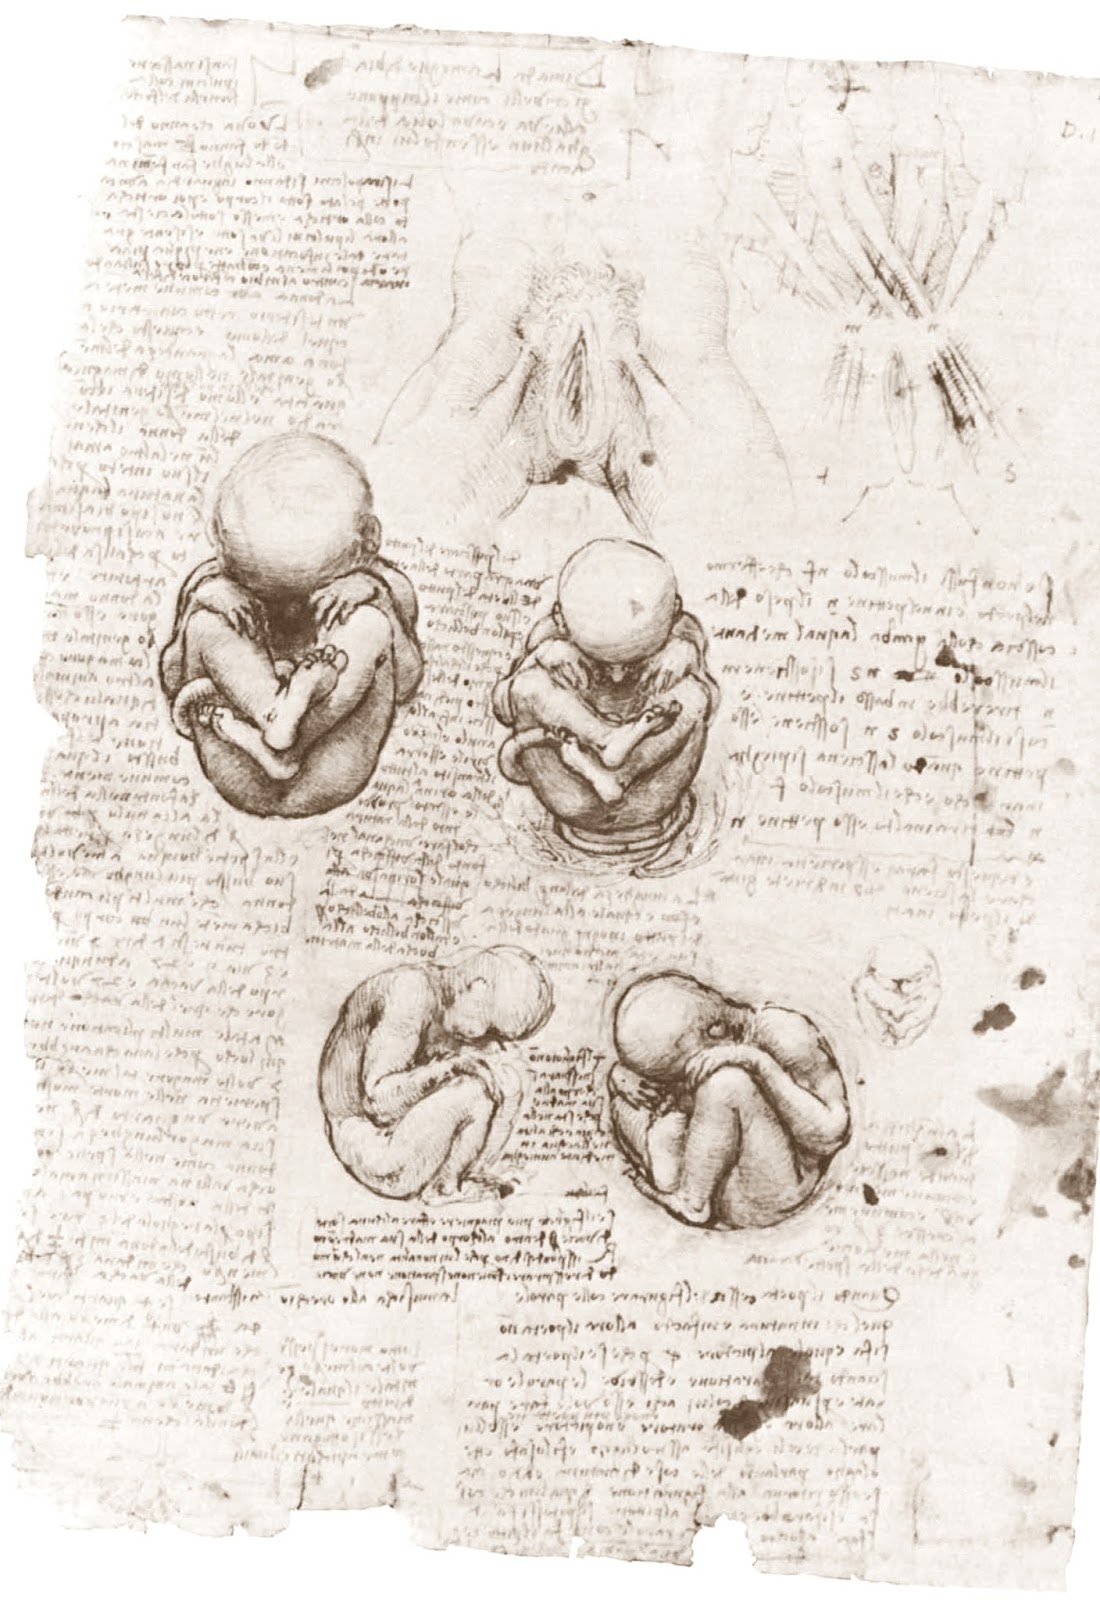 Leonardo+da+Vinci-1452-1519 (776).jpg